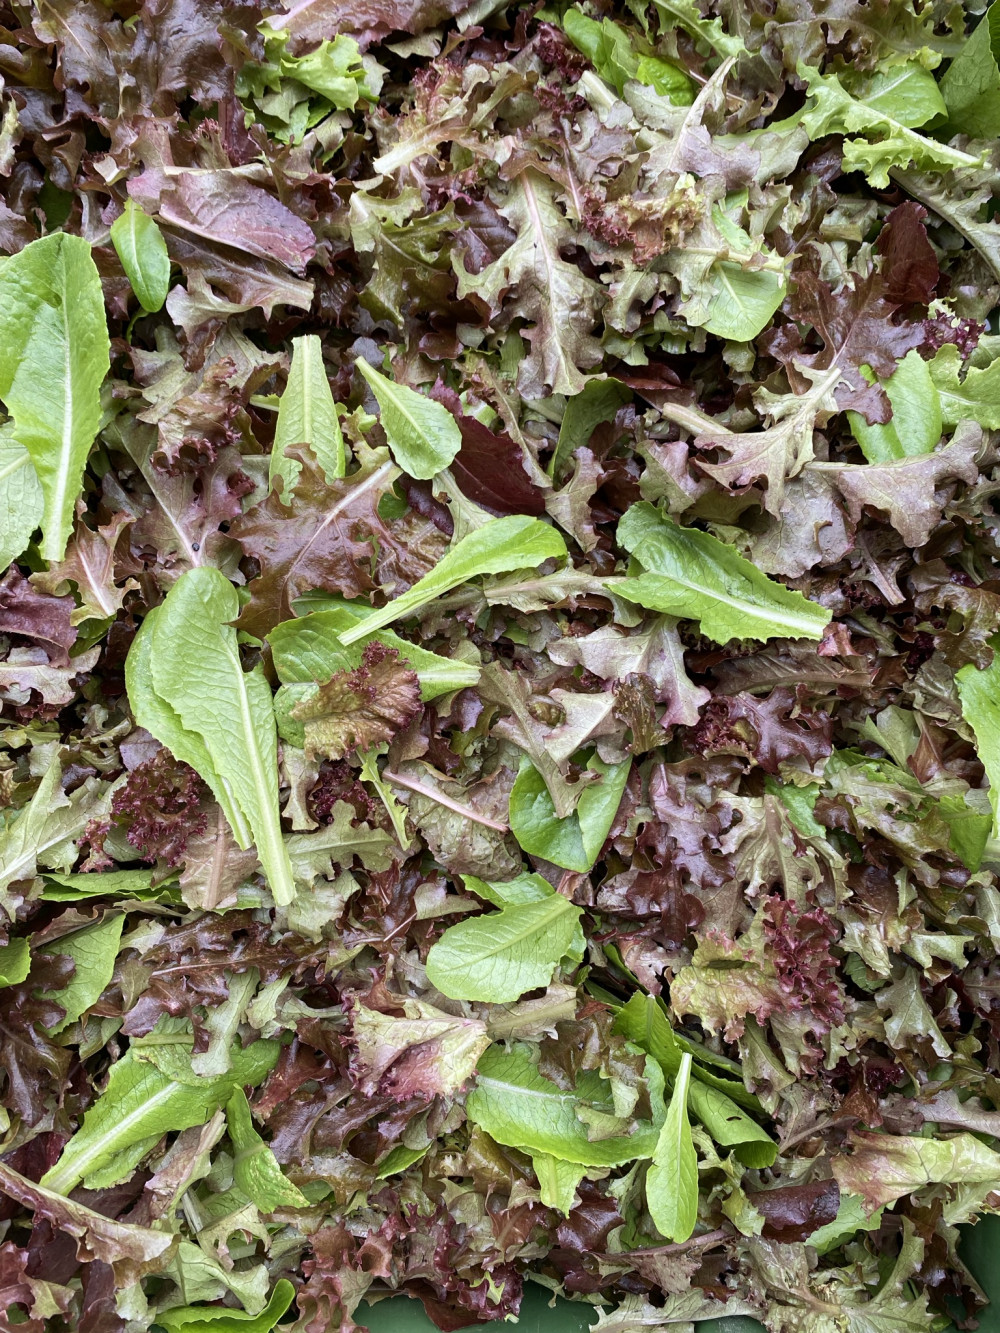 Salad Mix - LARGE